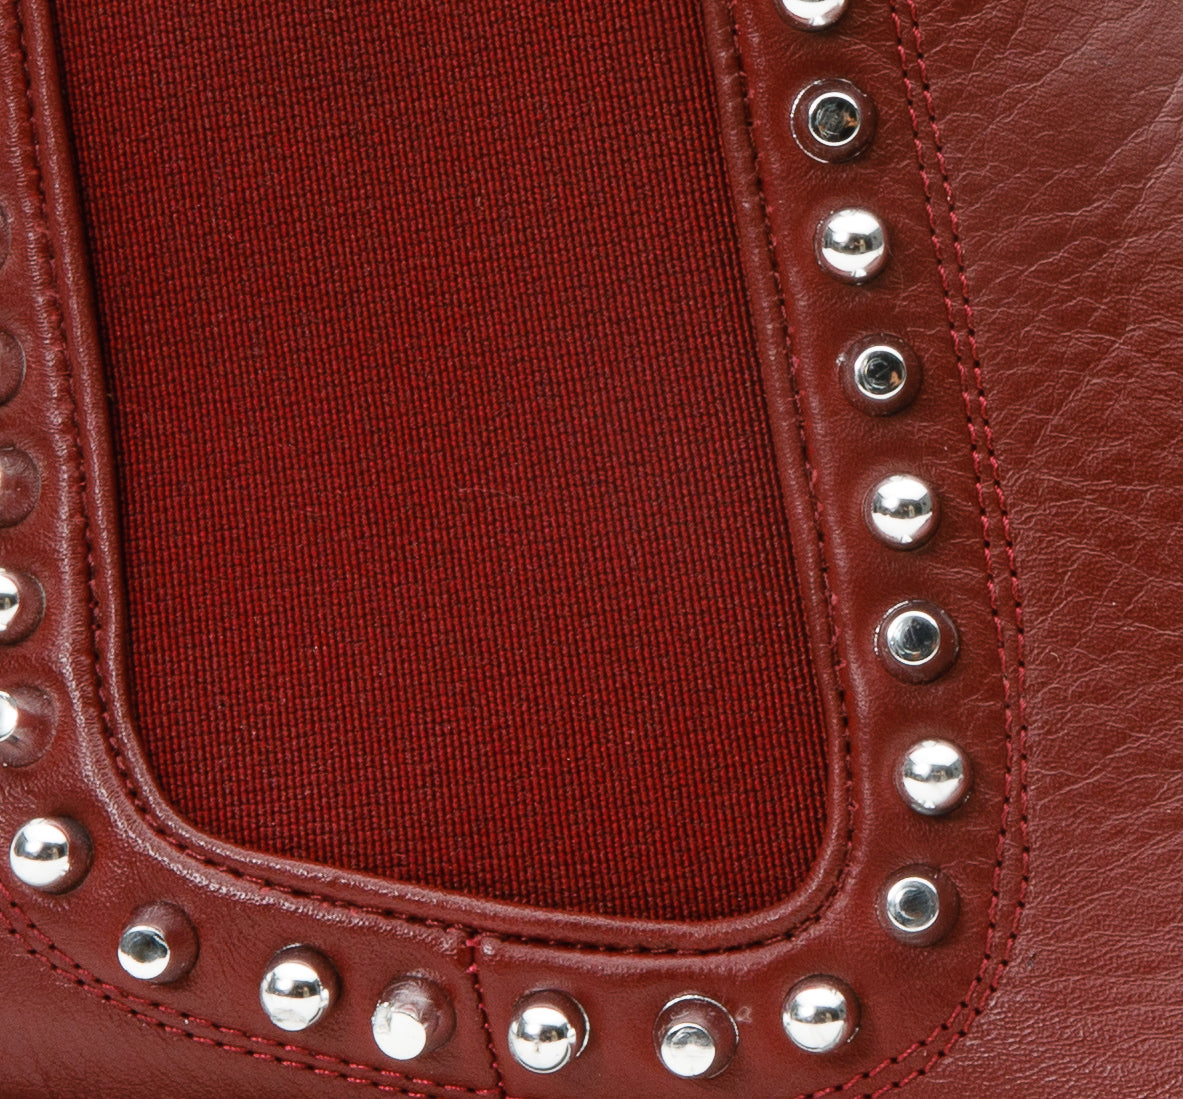 The Vuvulane Burgundy Spike Leather Ankle Women  Boot